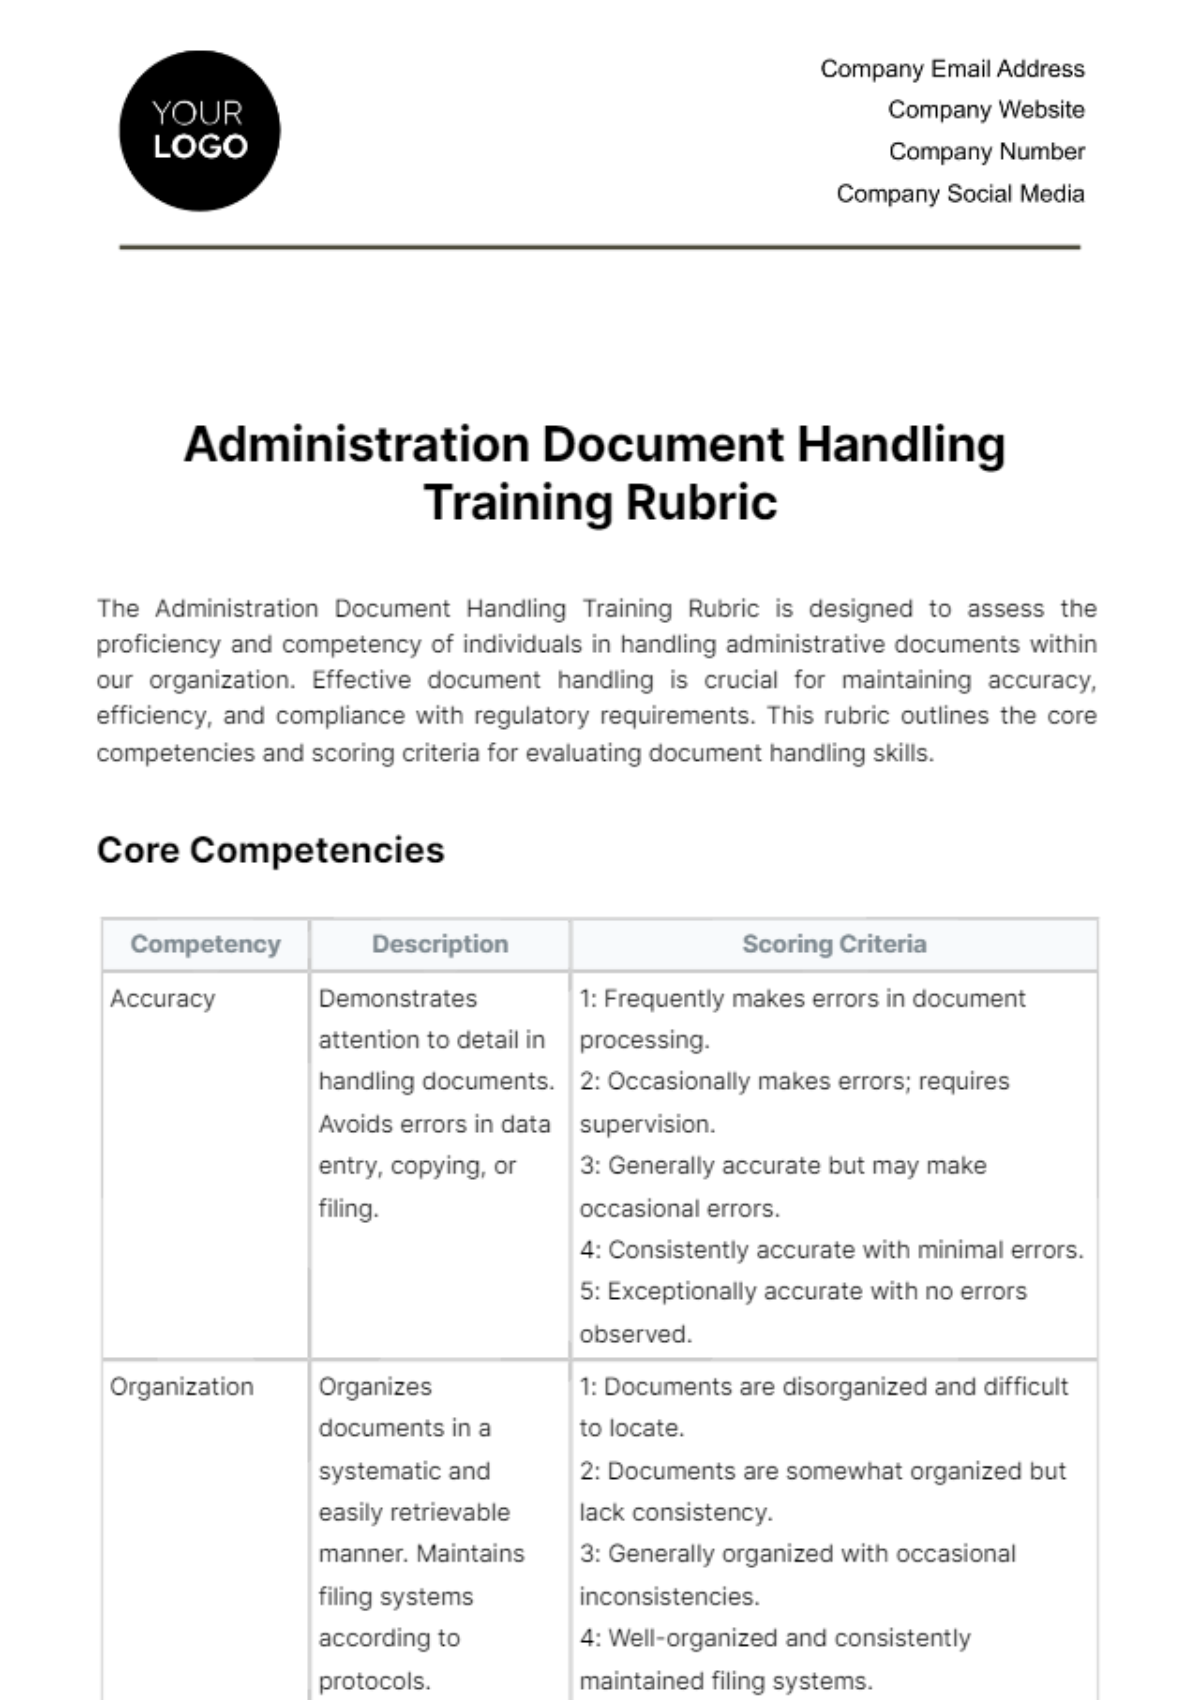 Administration Document Handling Training Rubric Template